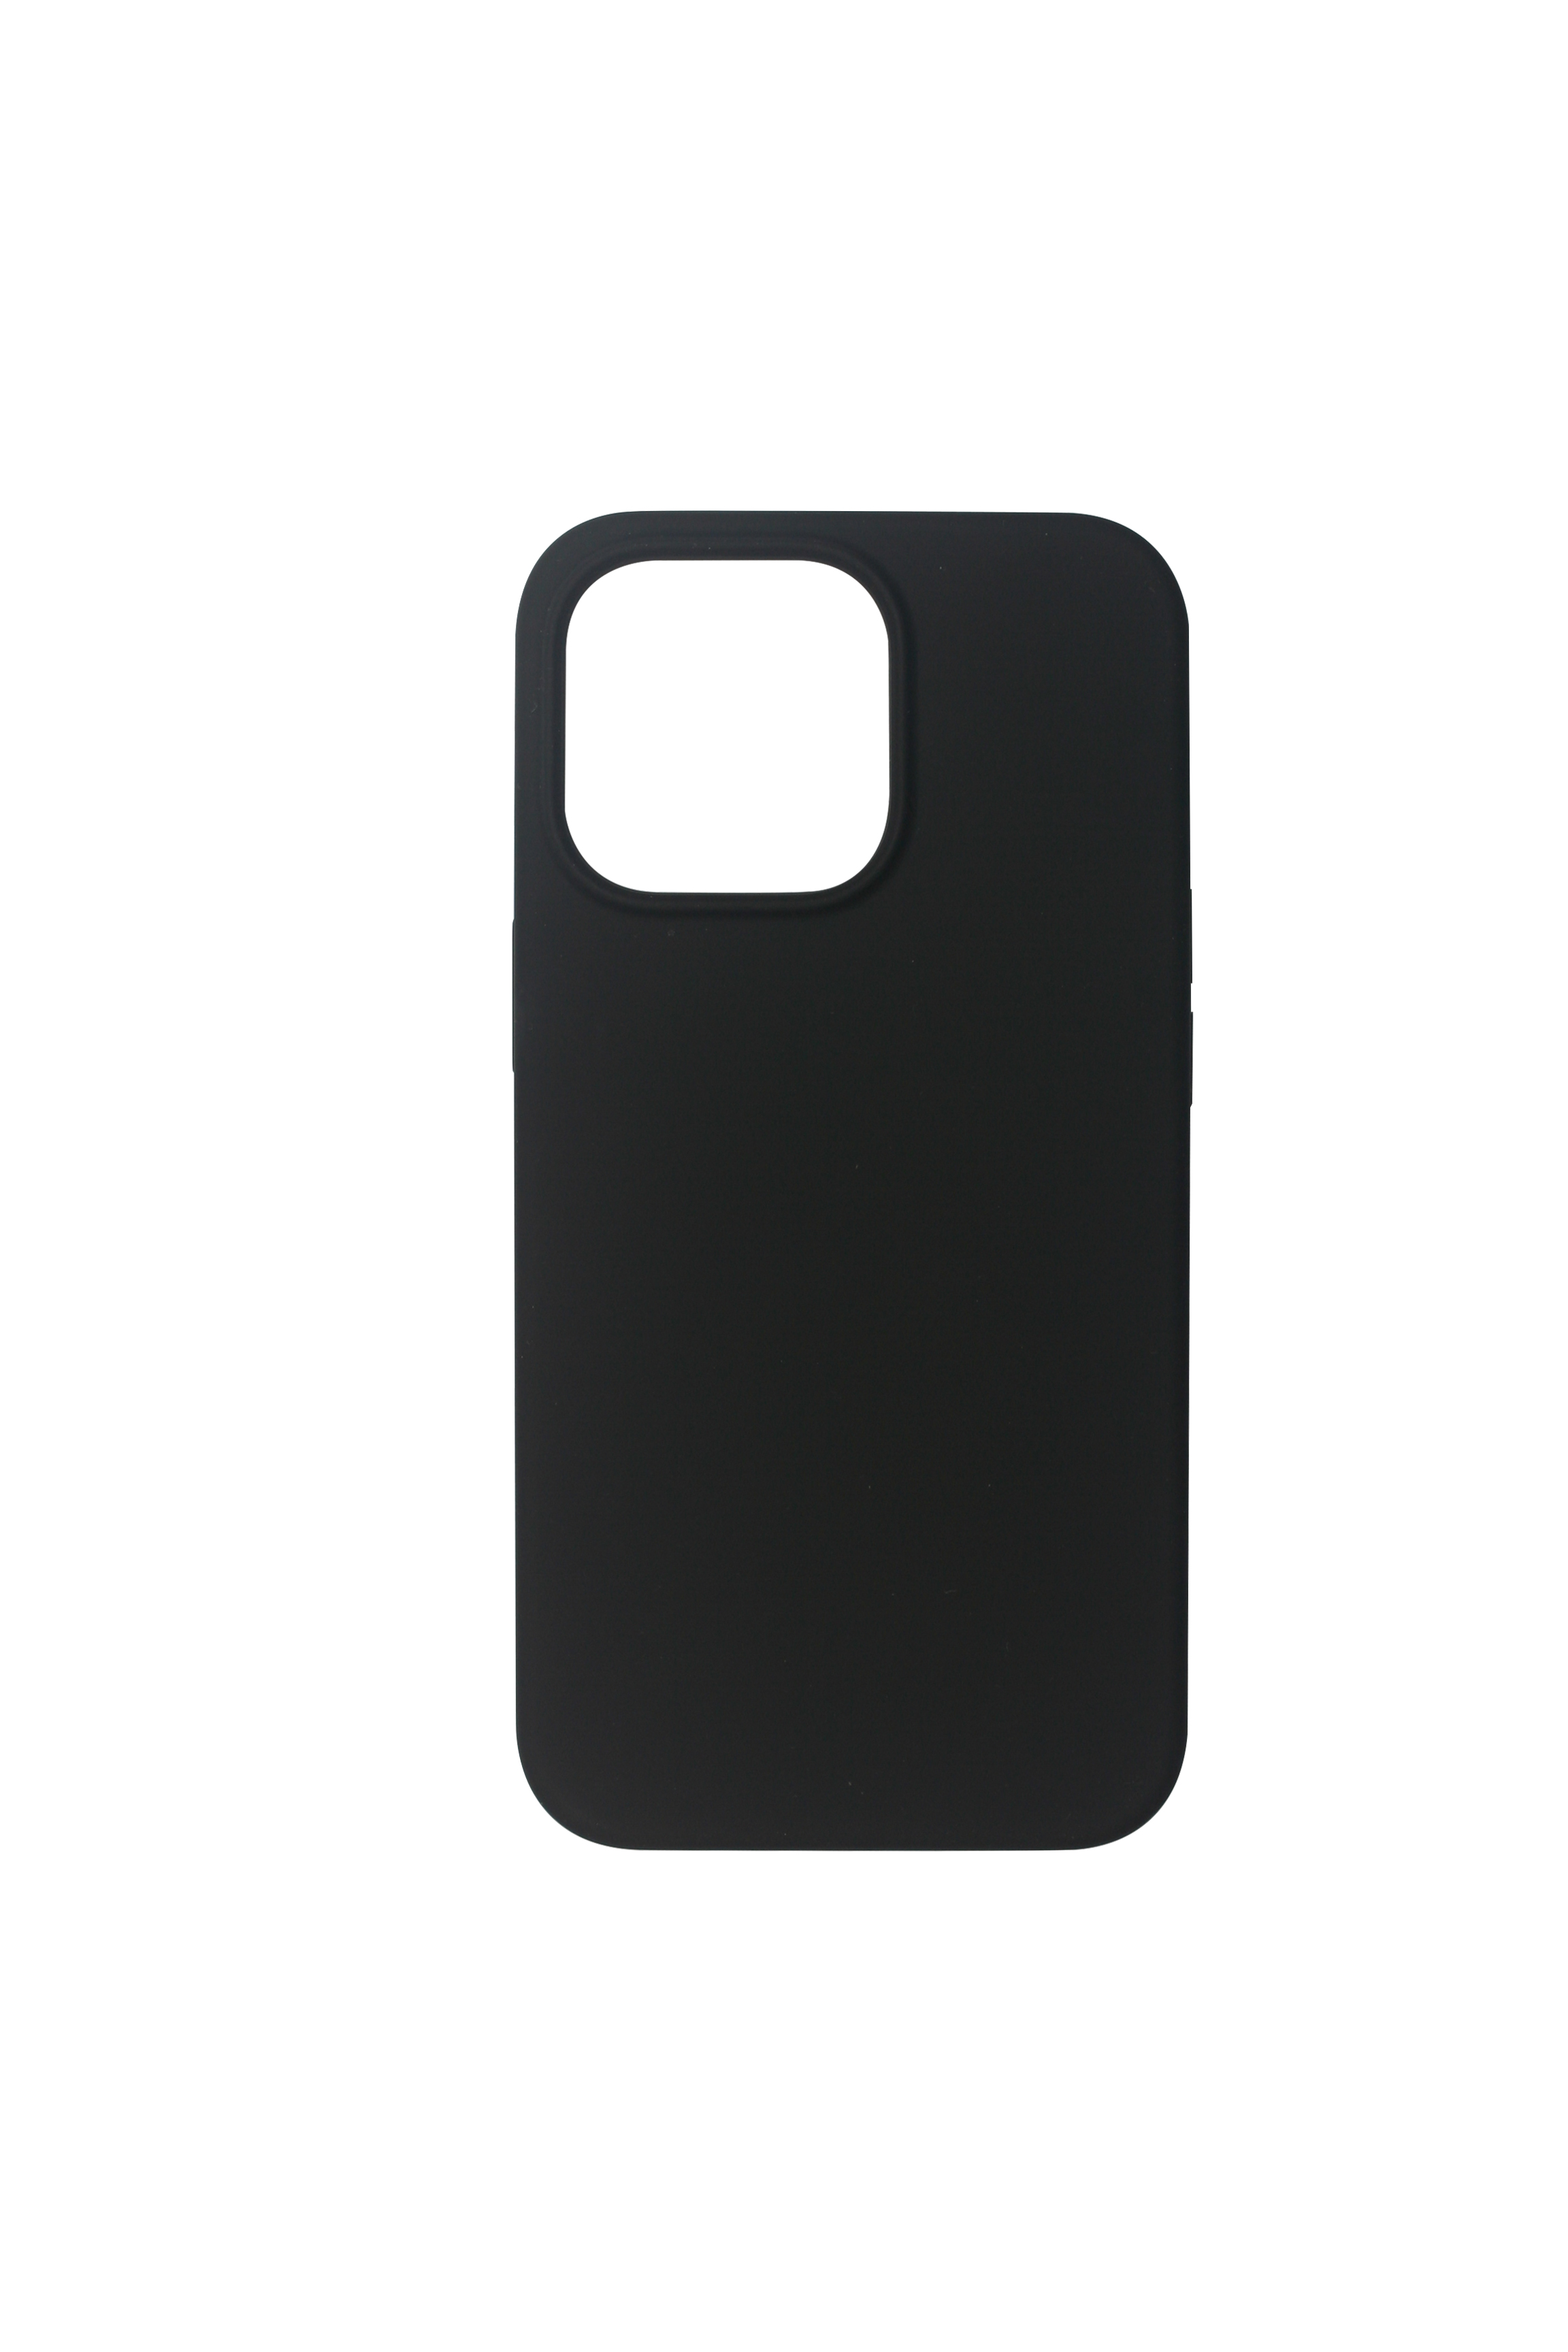 Køb eSTUFF iPhone Pro Case Black |  Humac Premium Reseller